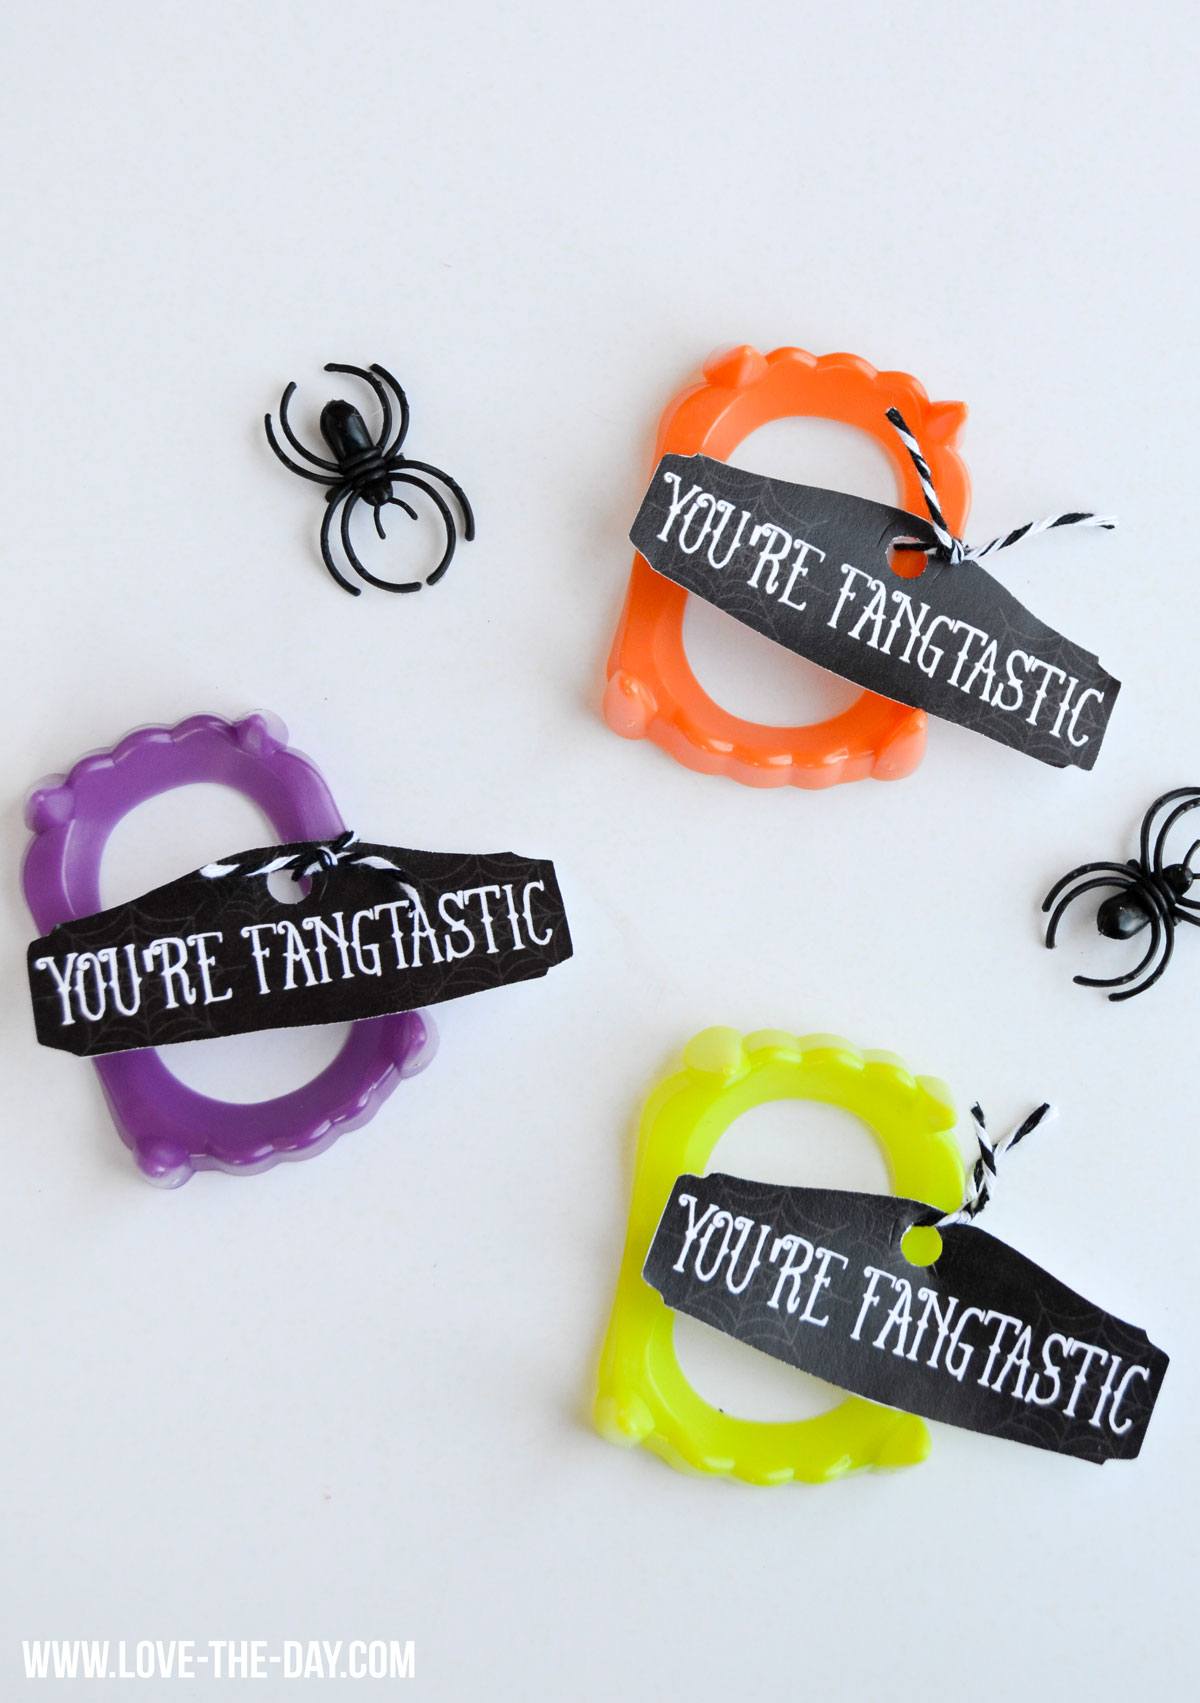 Fangtastic halloween idea & free printable